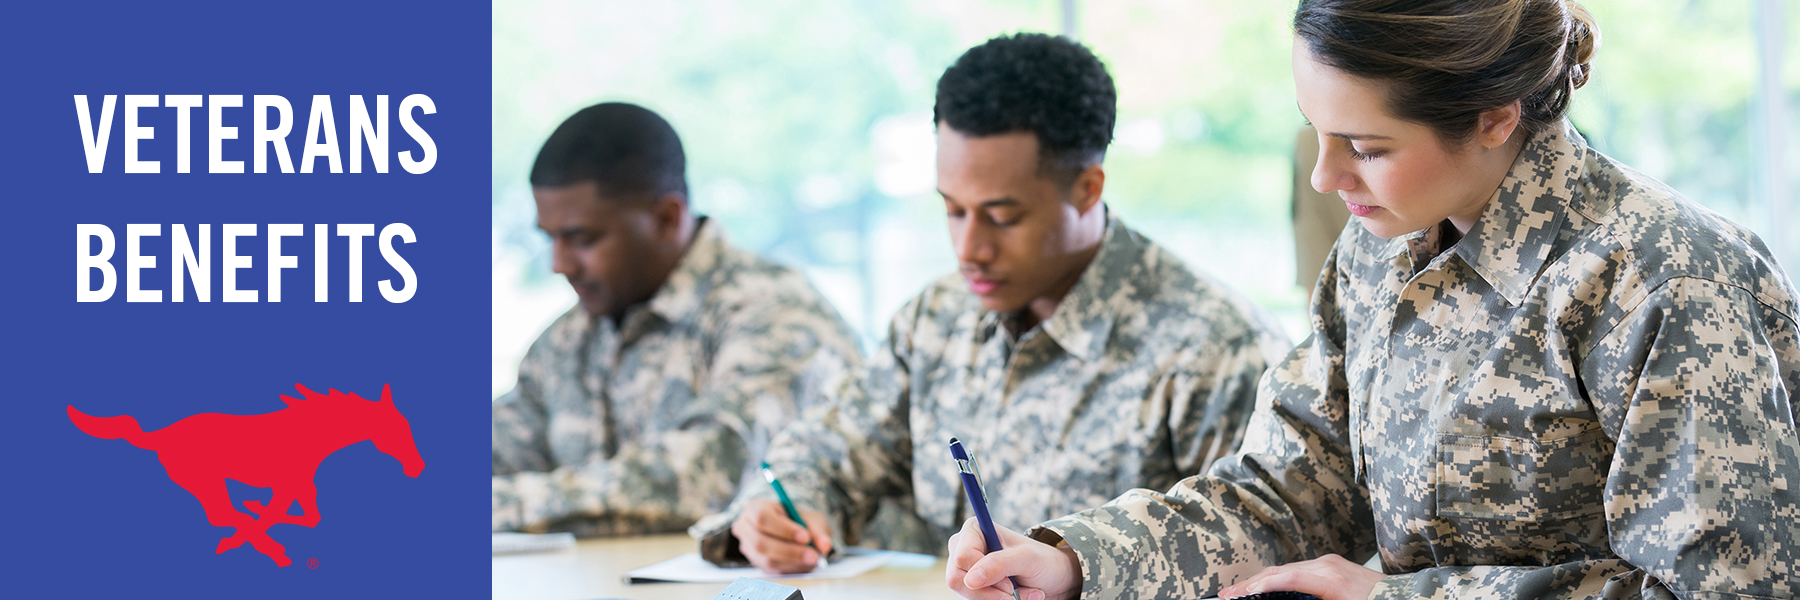 Veterans Benefits - Three students in military uniform take an exam